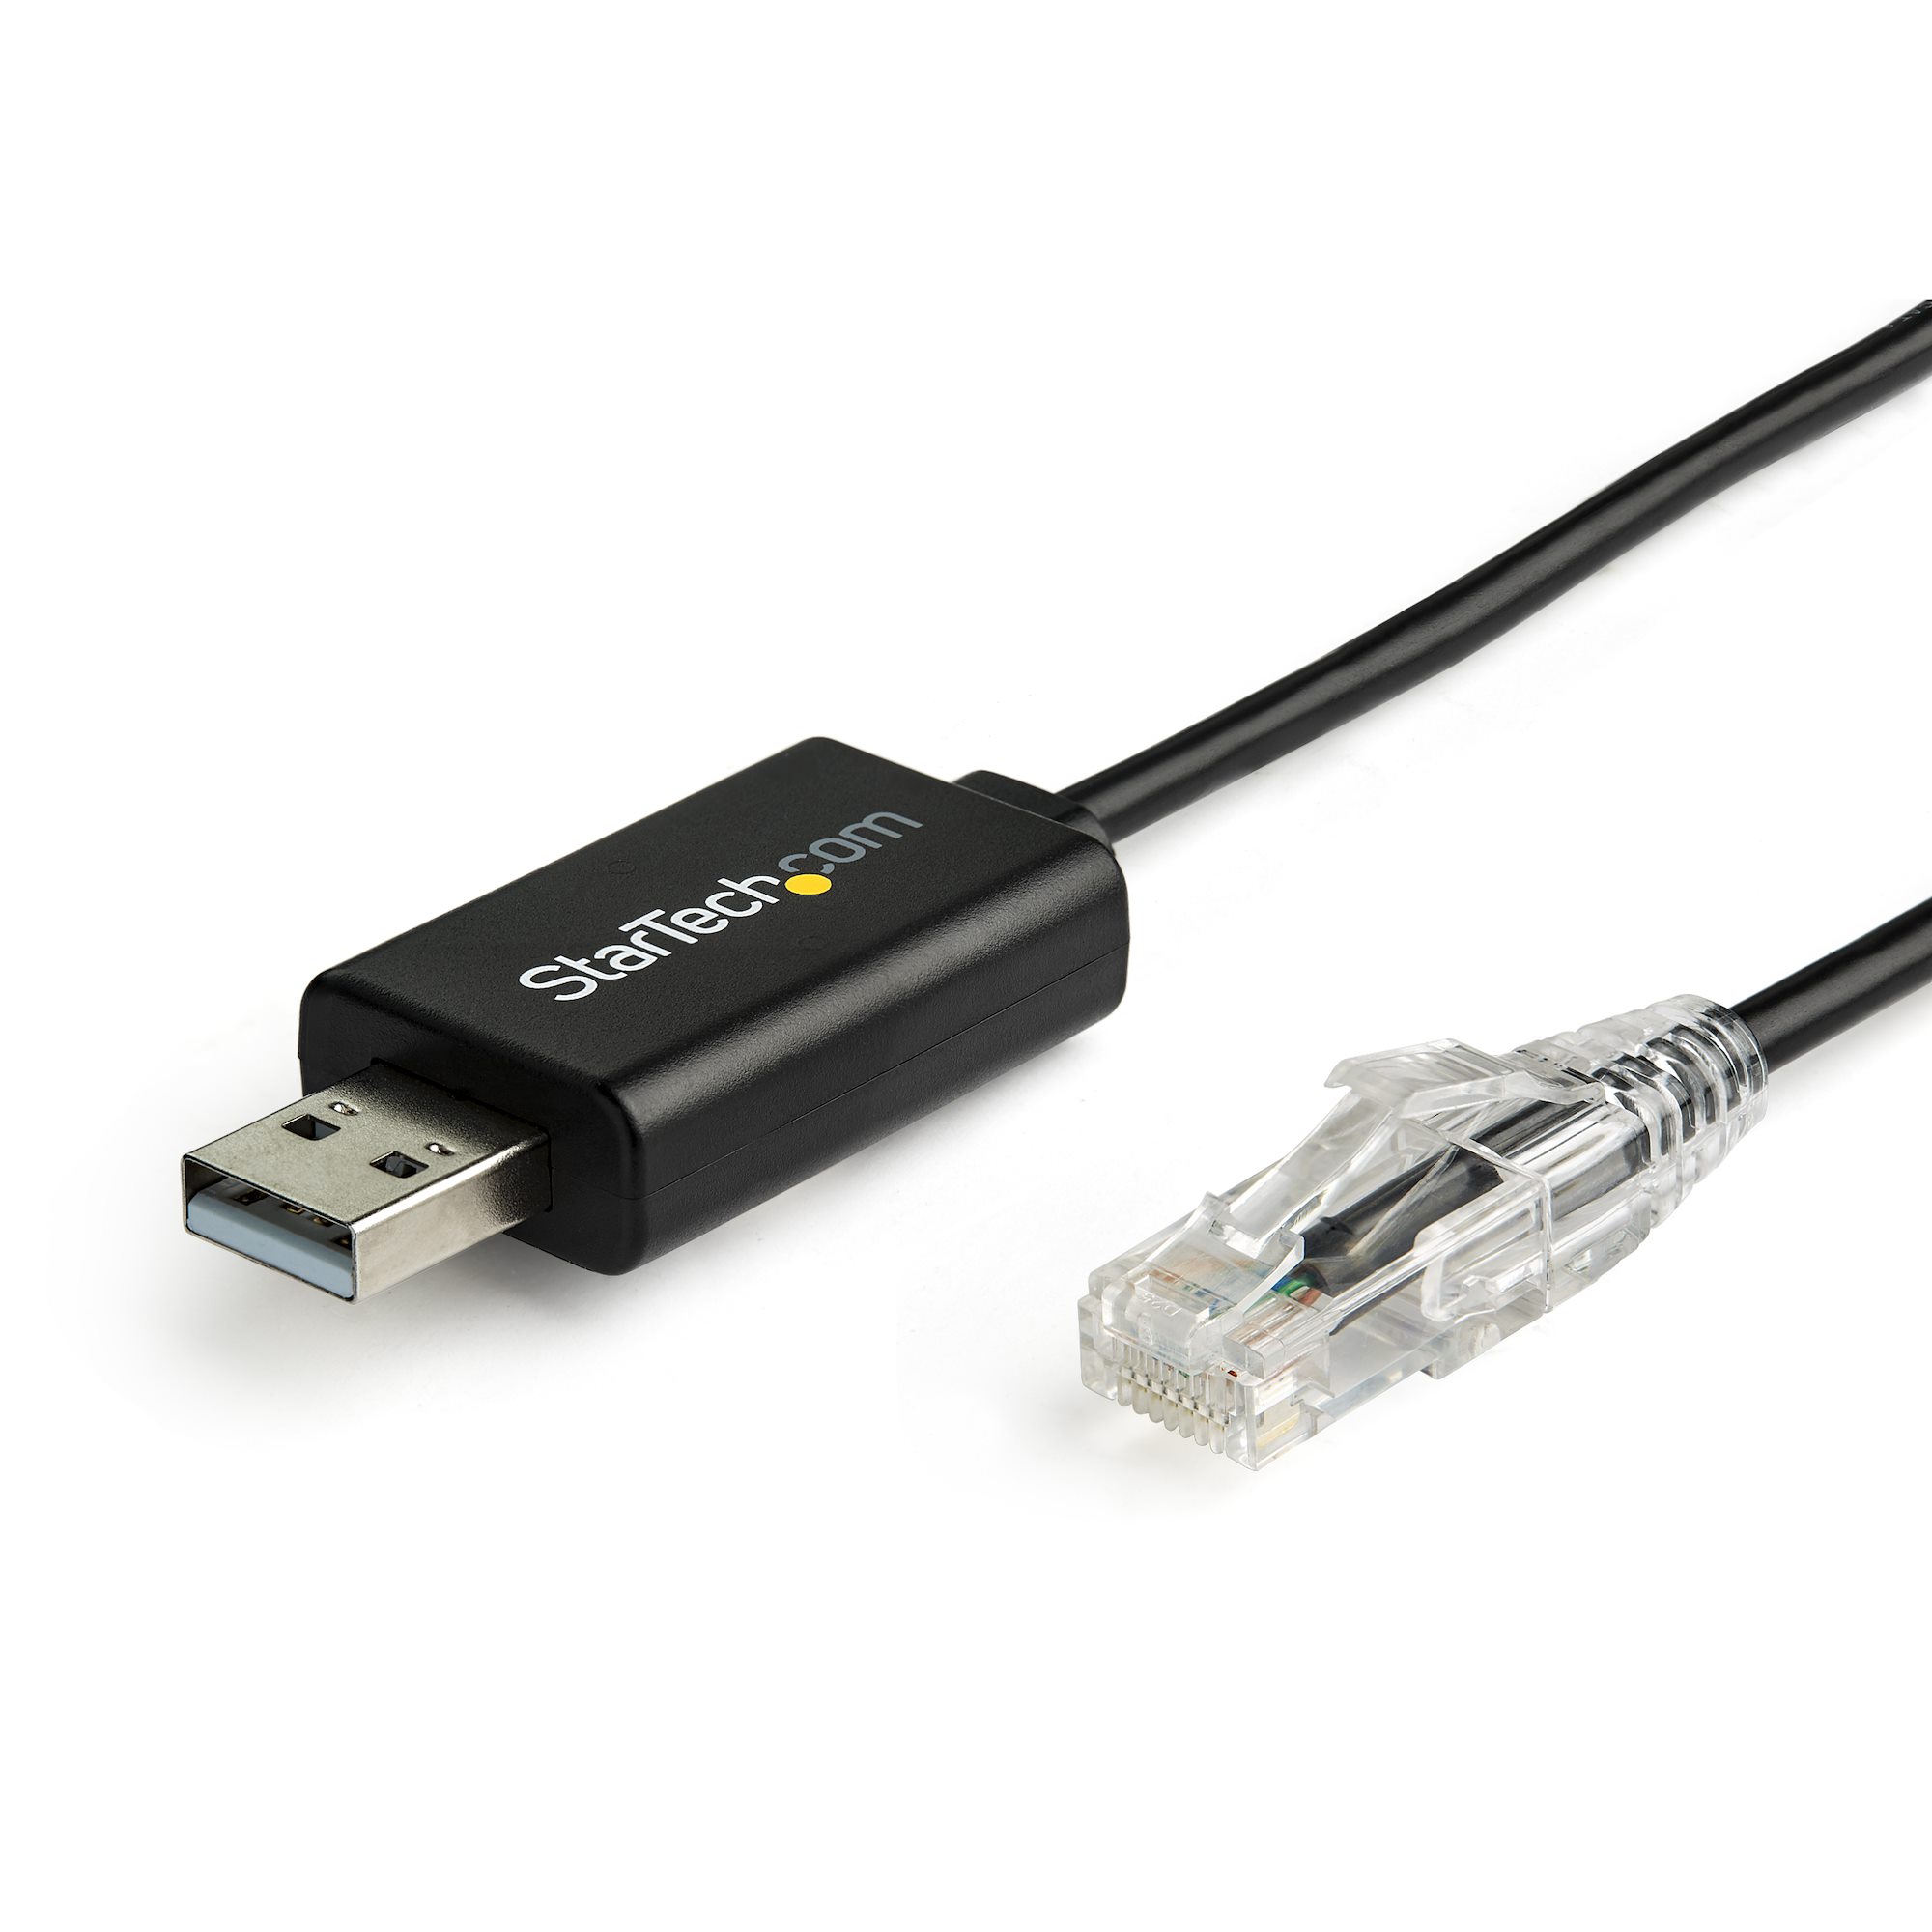 Usb rj45 купить. Кабель USB rj45. Консольный кабель USB rj45. Кабель консоль для Cisco USB rj45.